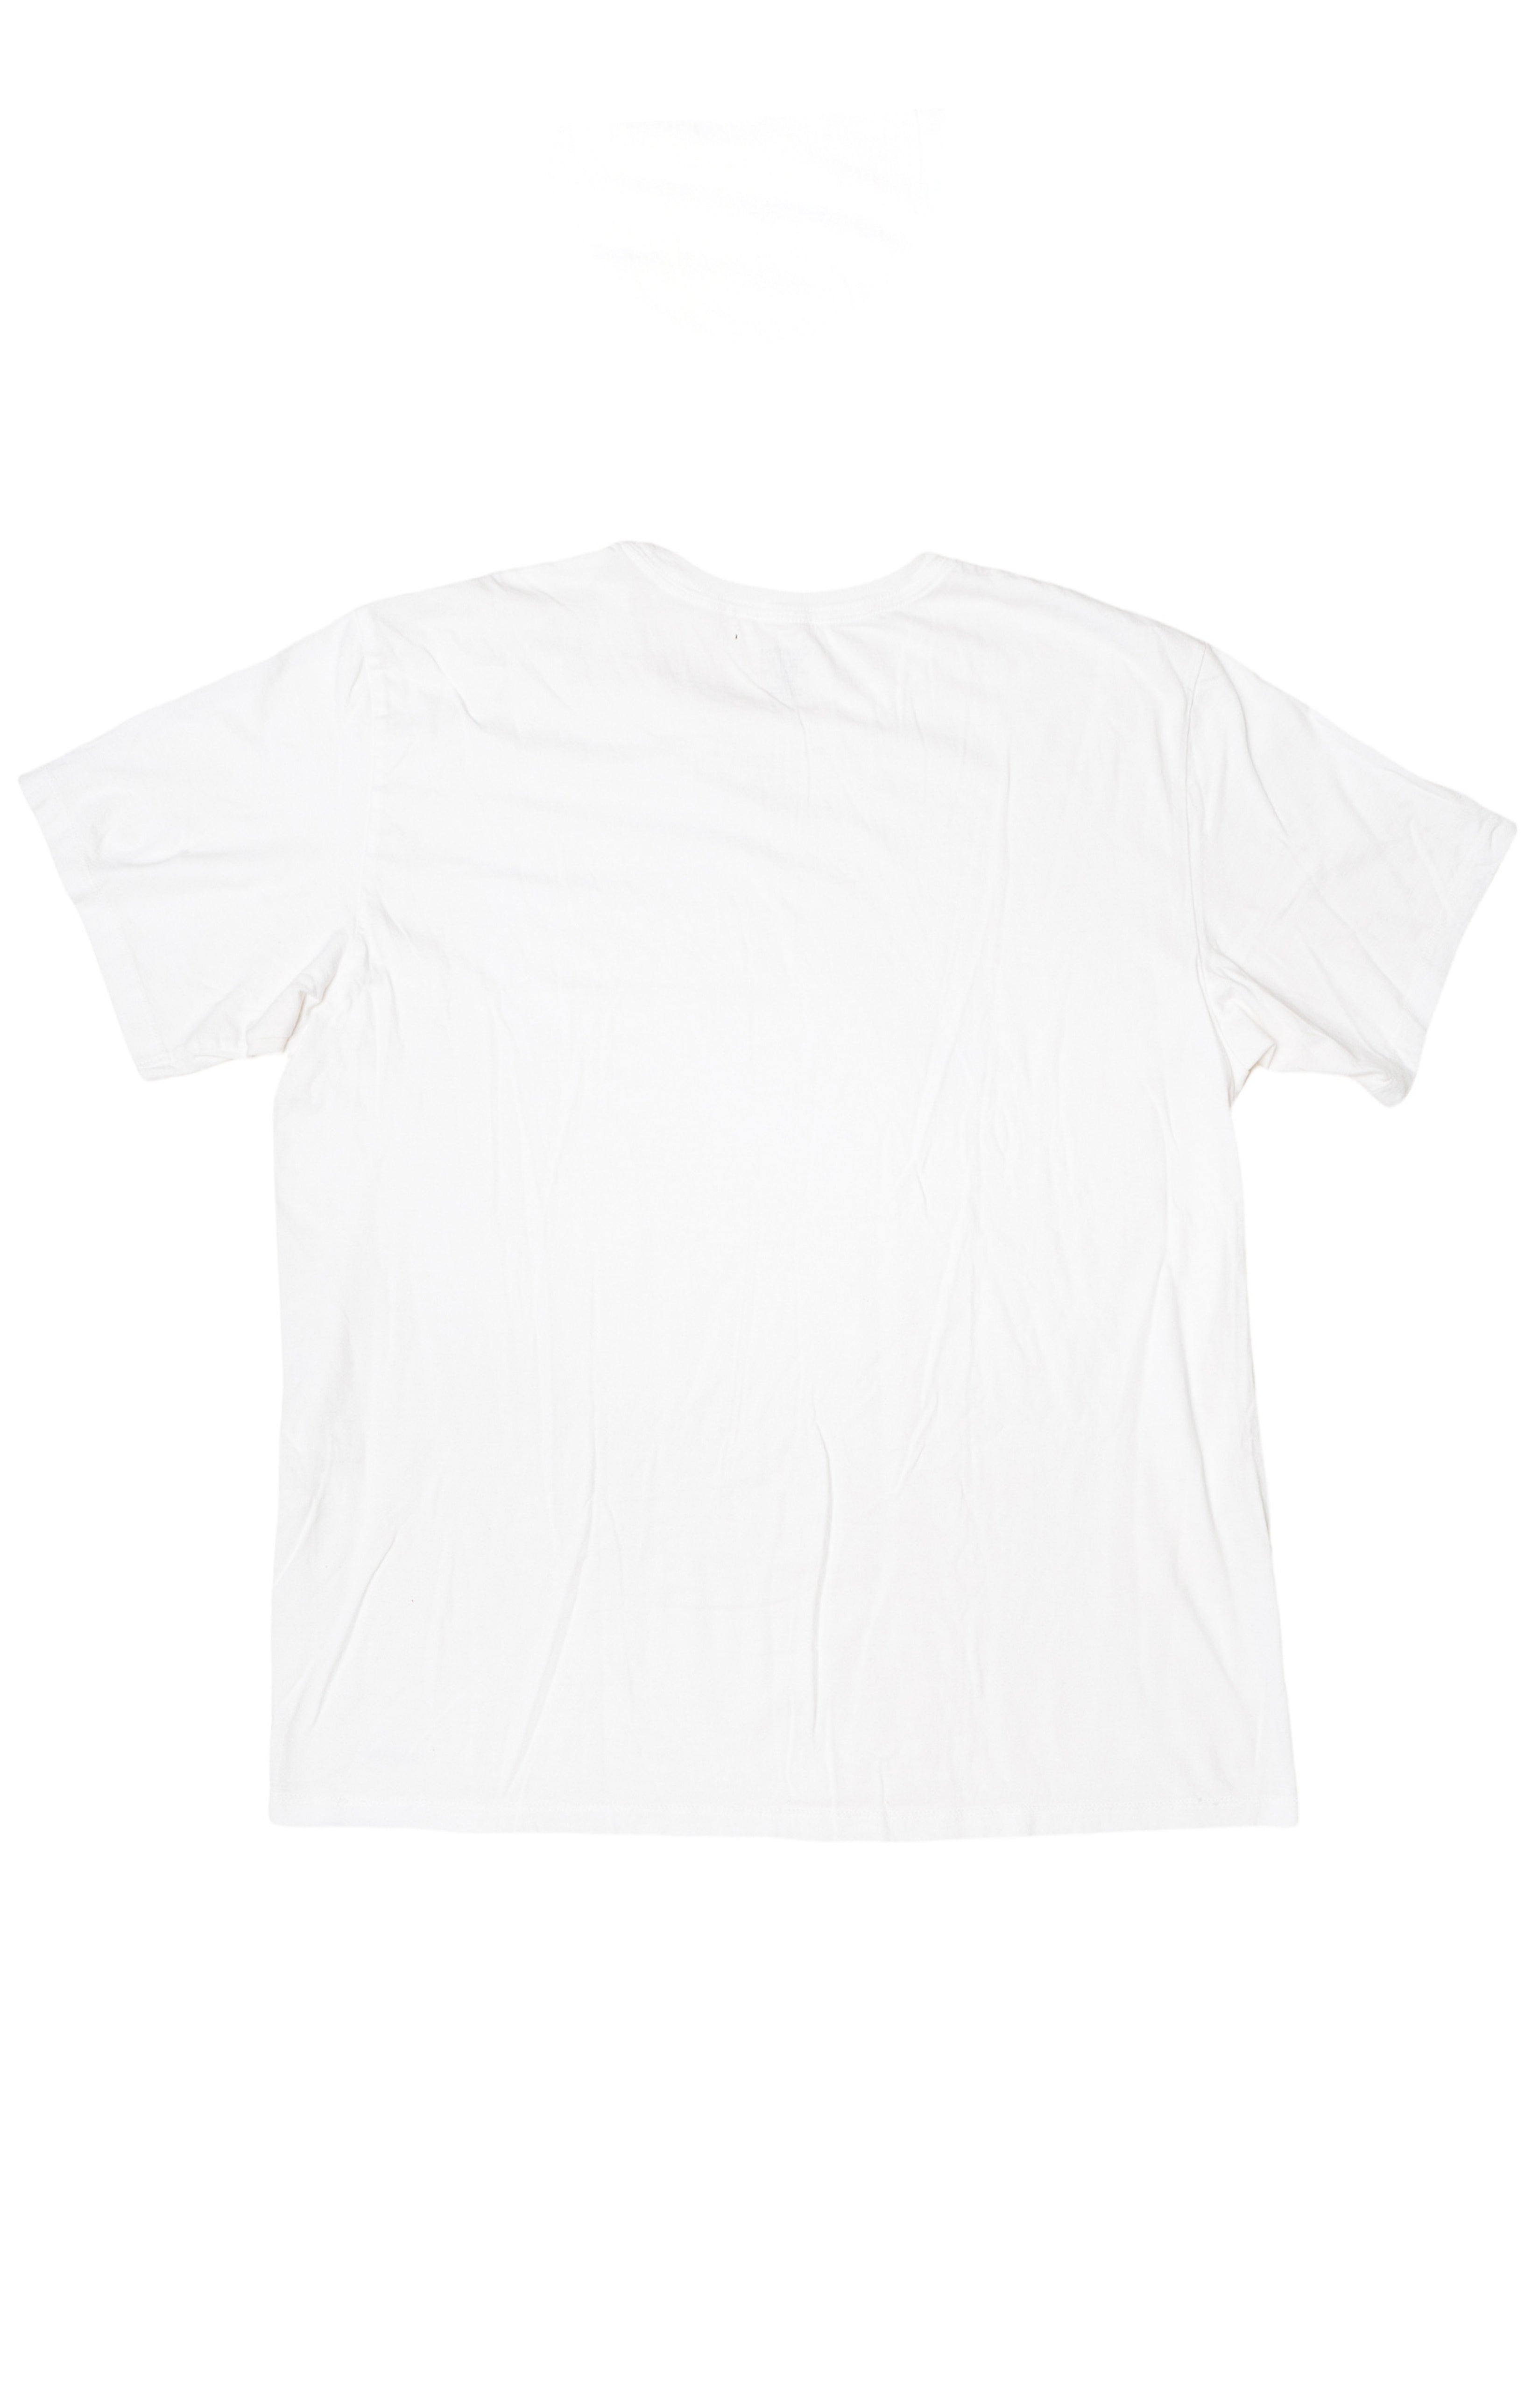 CALVIN KLEIN T-Shirt Size: XL